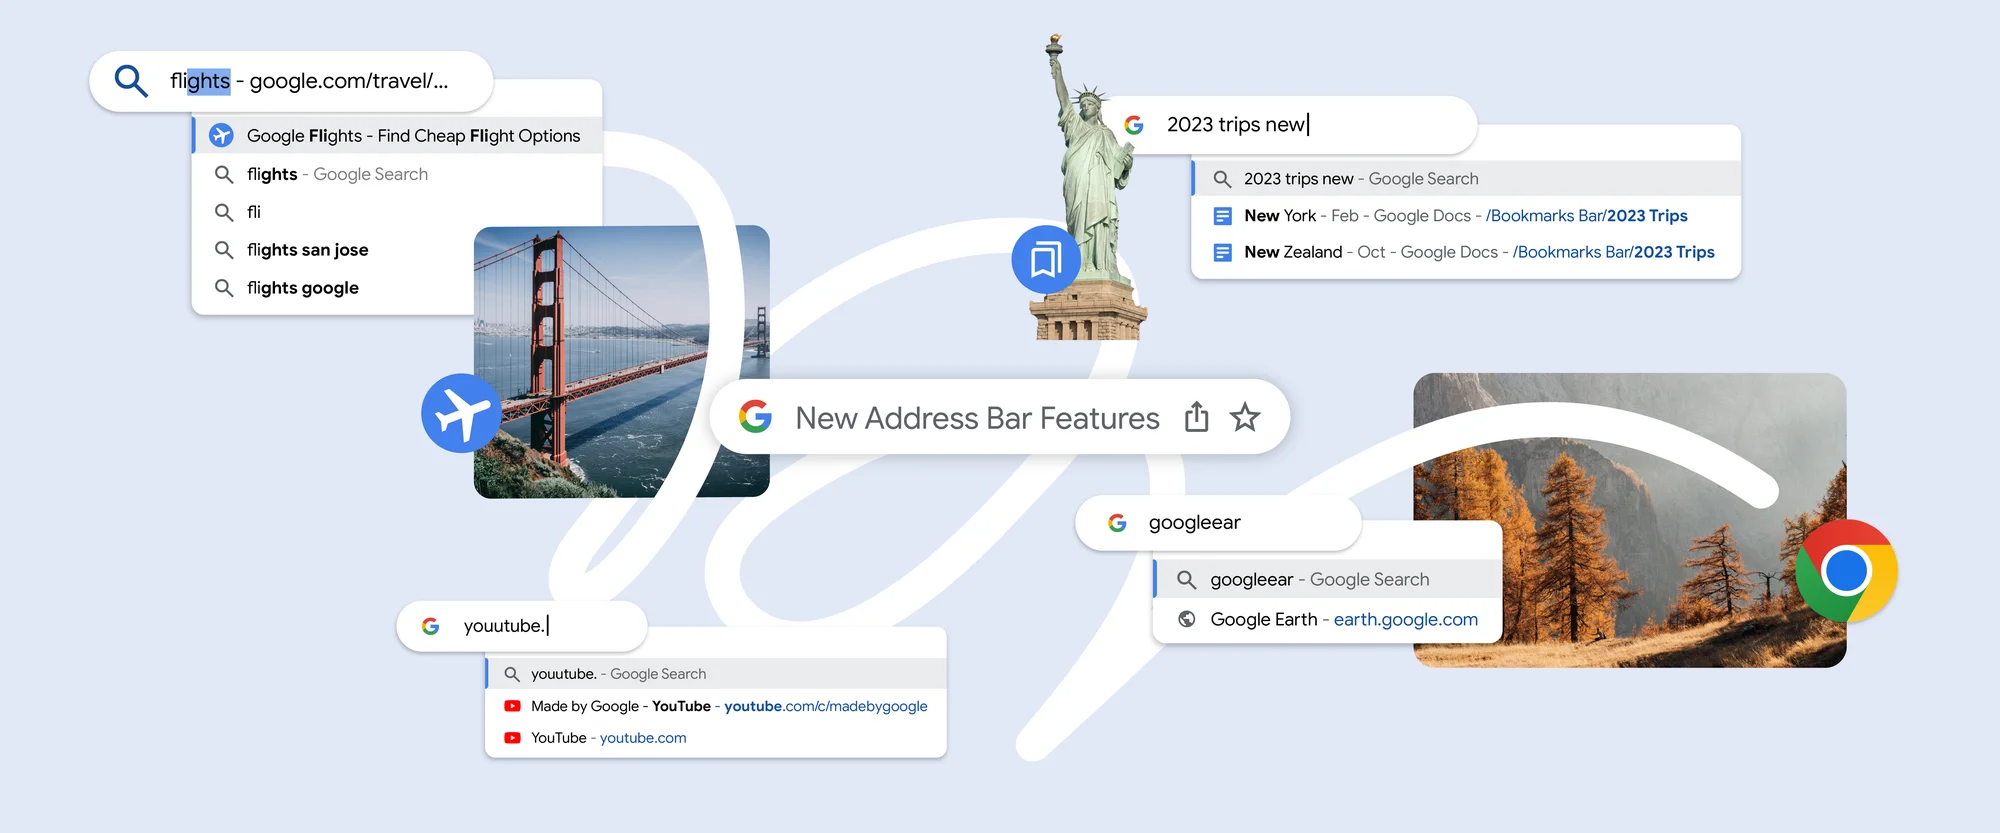 The Google Sites Horizontal Navigation Bar 